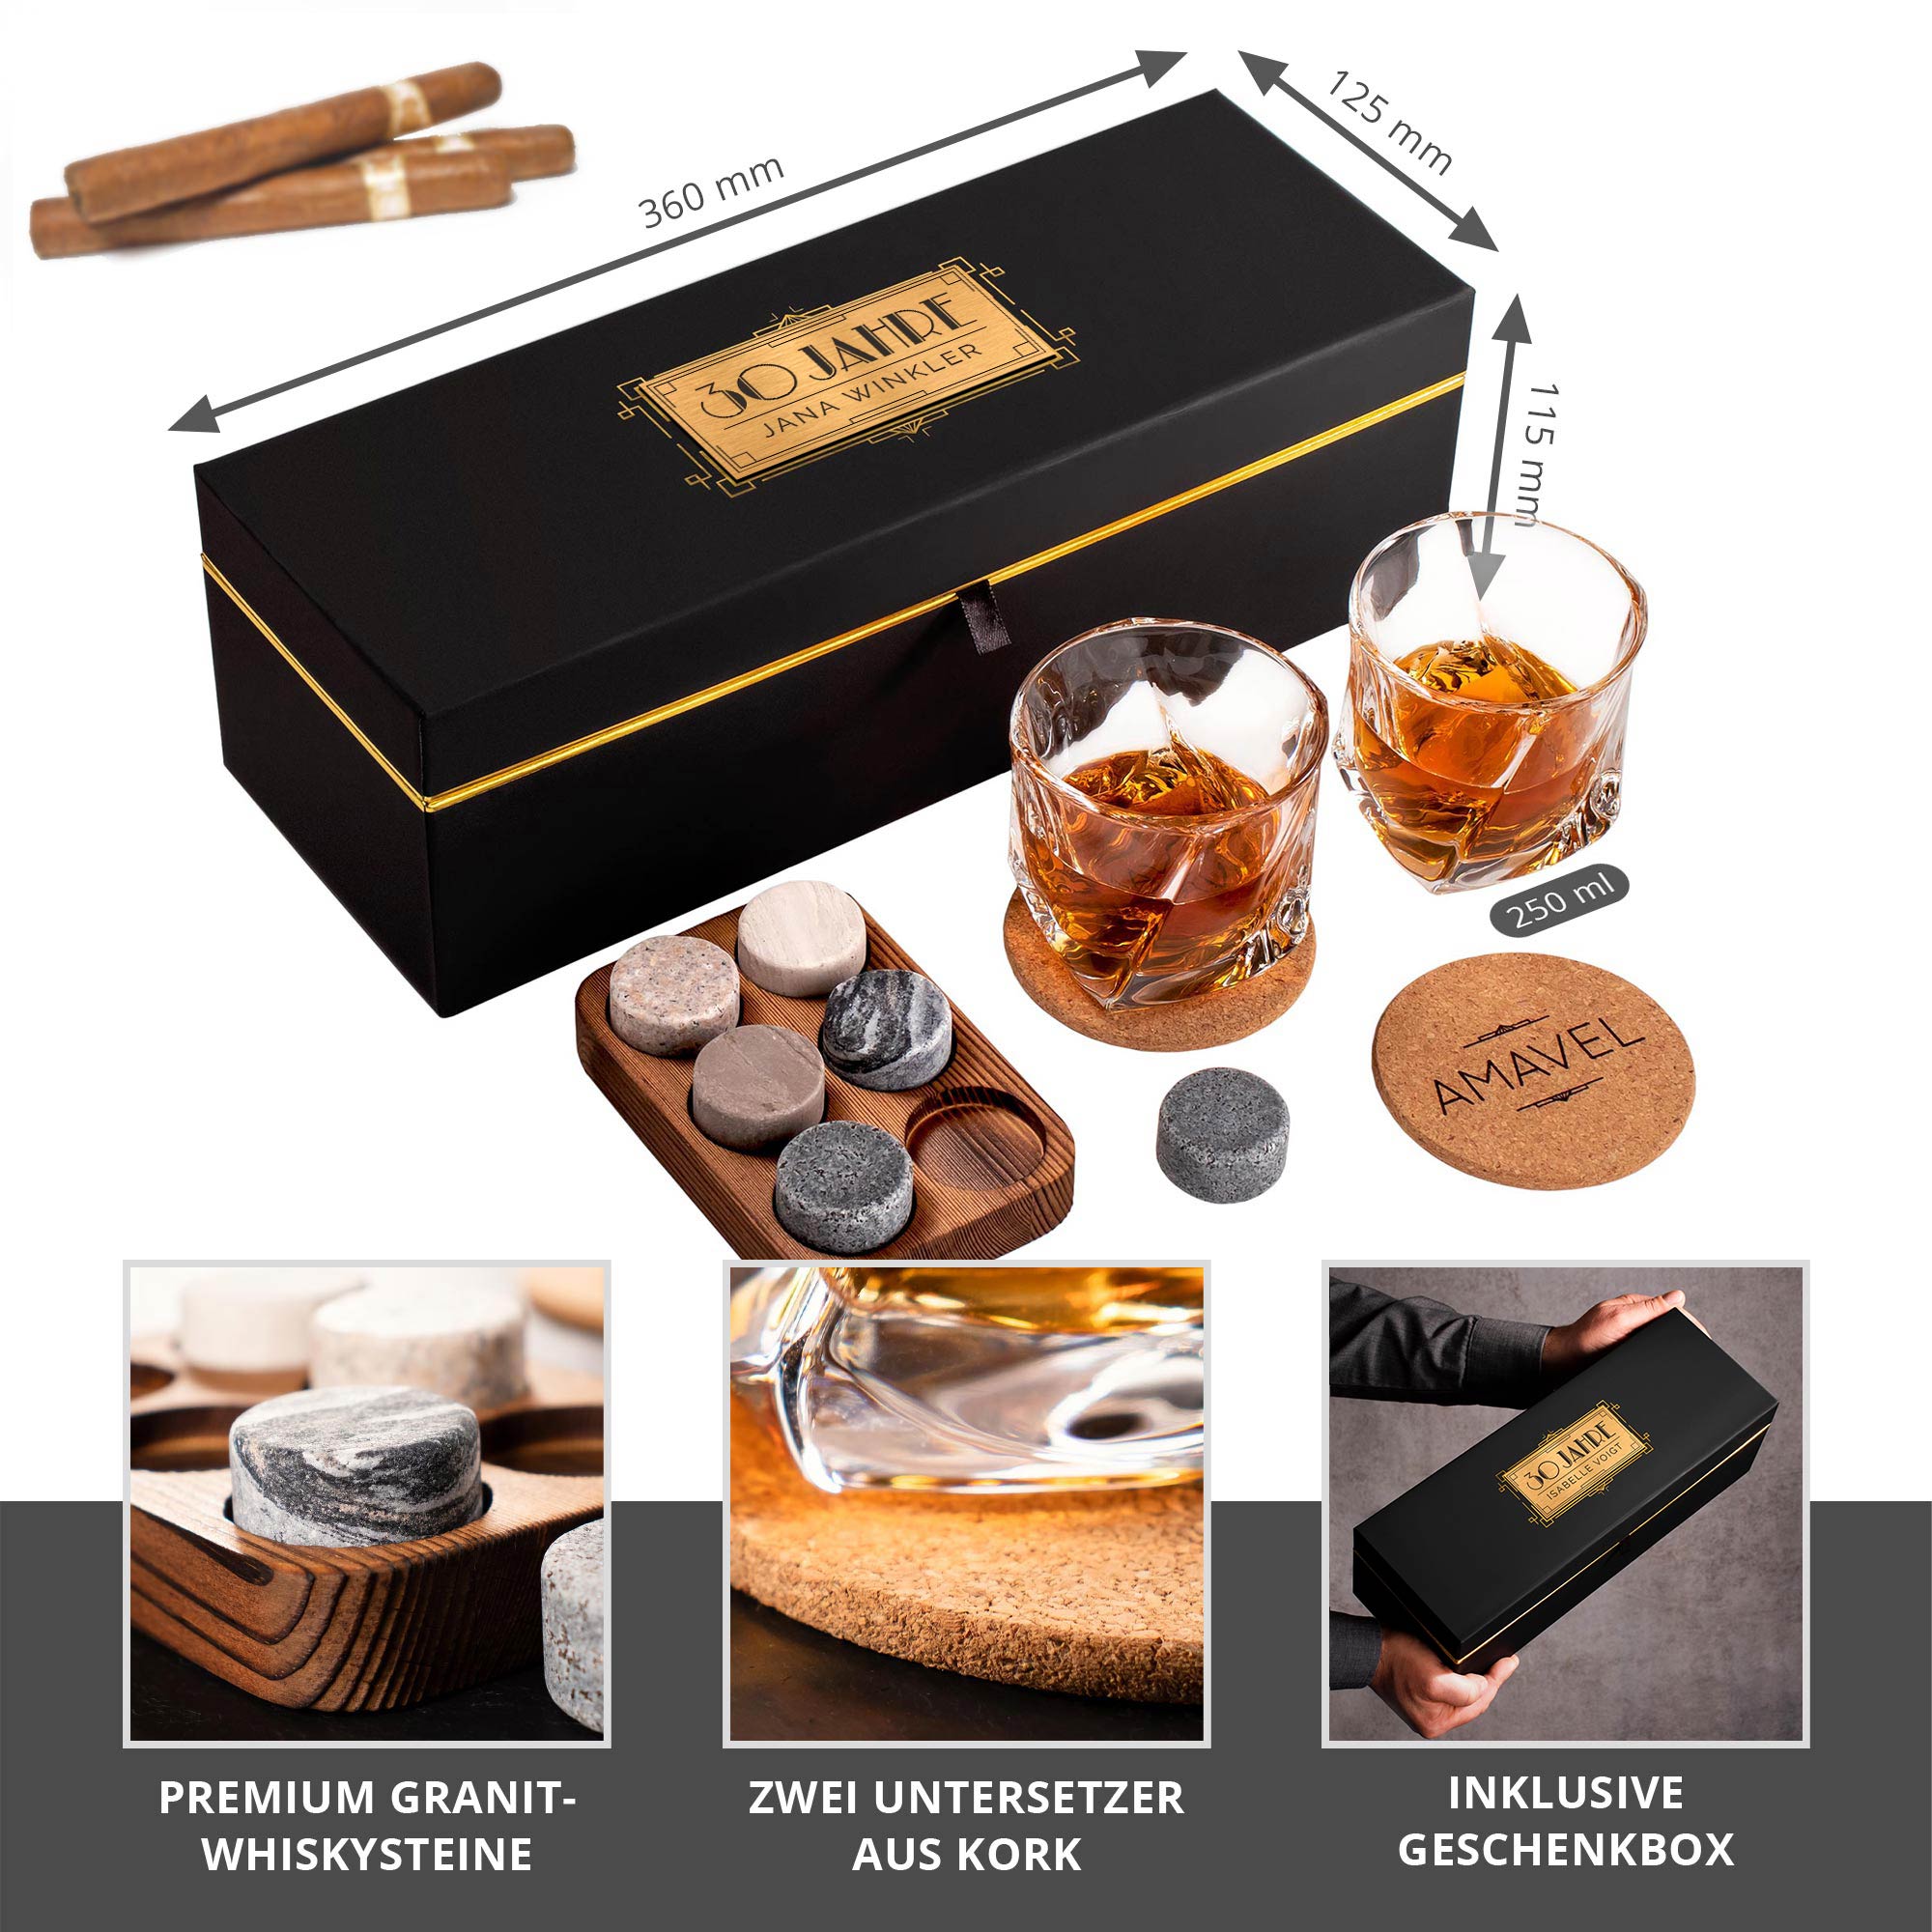 Whisky Set in edler Geschenkbox zum 30. Geburtstag 0021-0002-DE-0003 - 1